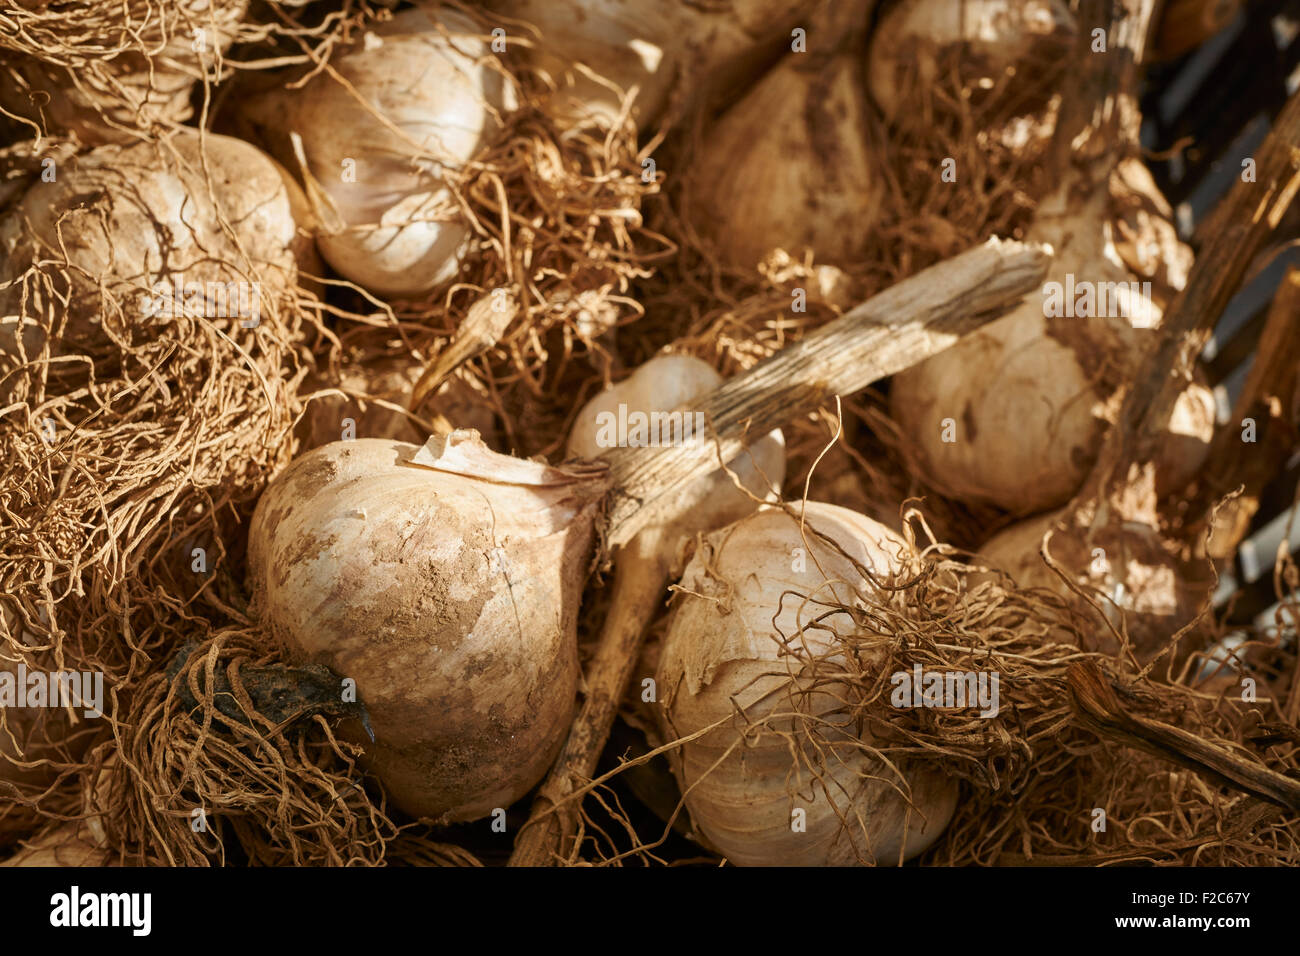 Long neck garlic at the Union Square Greenmarket, Manhattan, New York City, USA Stock Photo